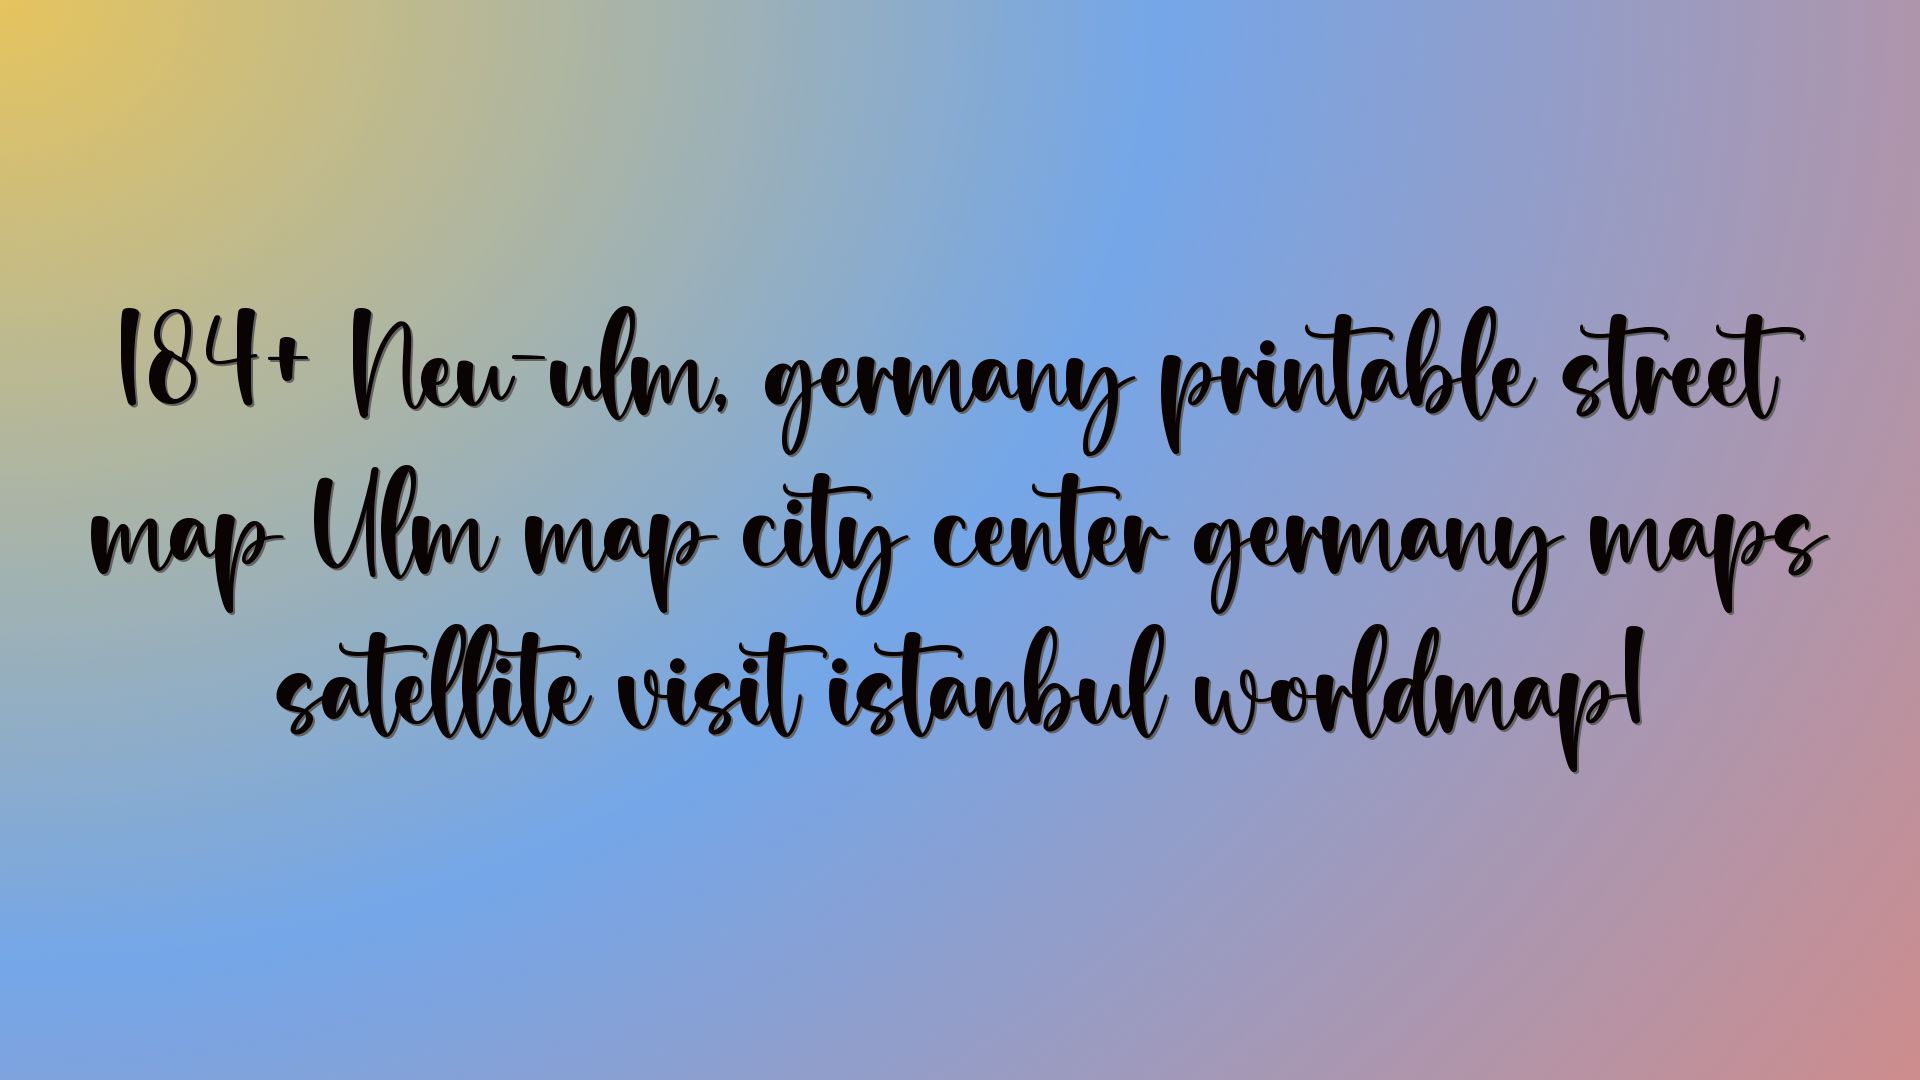 184+ Neu-ulm, germany printable street map Ulm map city center germany maps satellite visit istanbul worldmap1